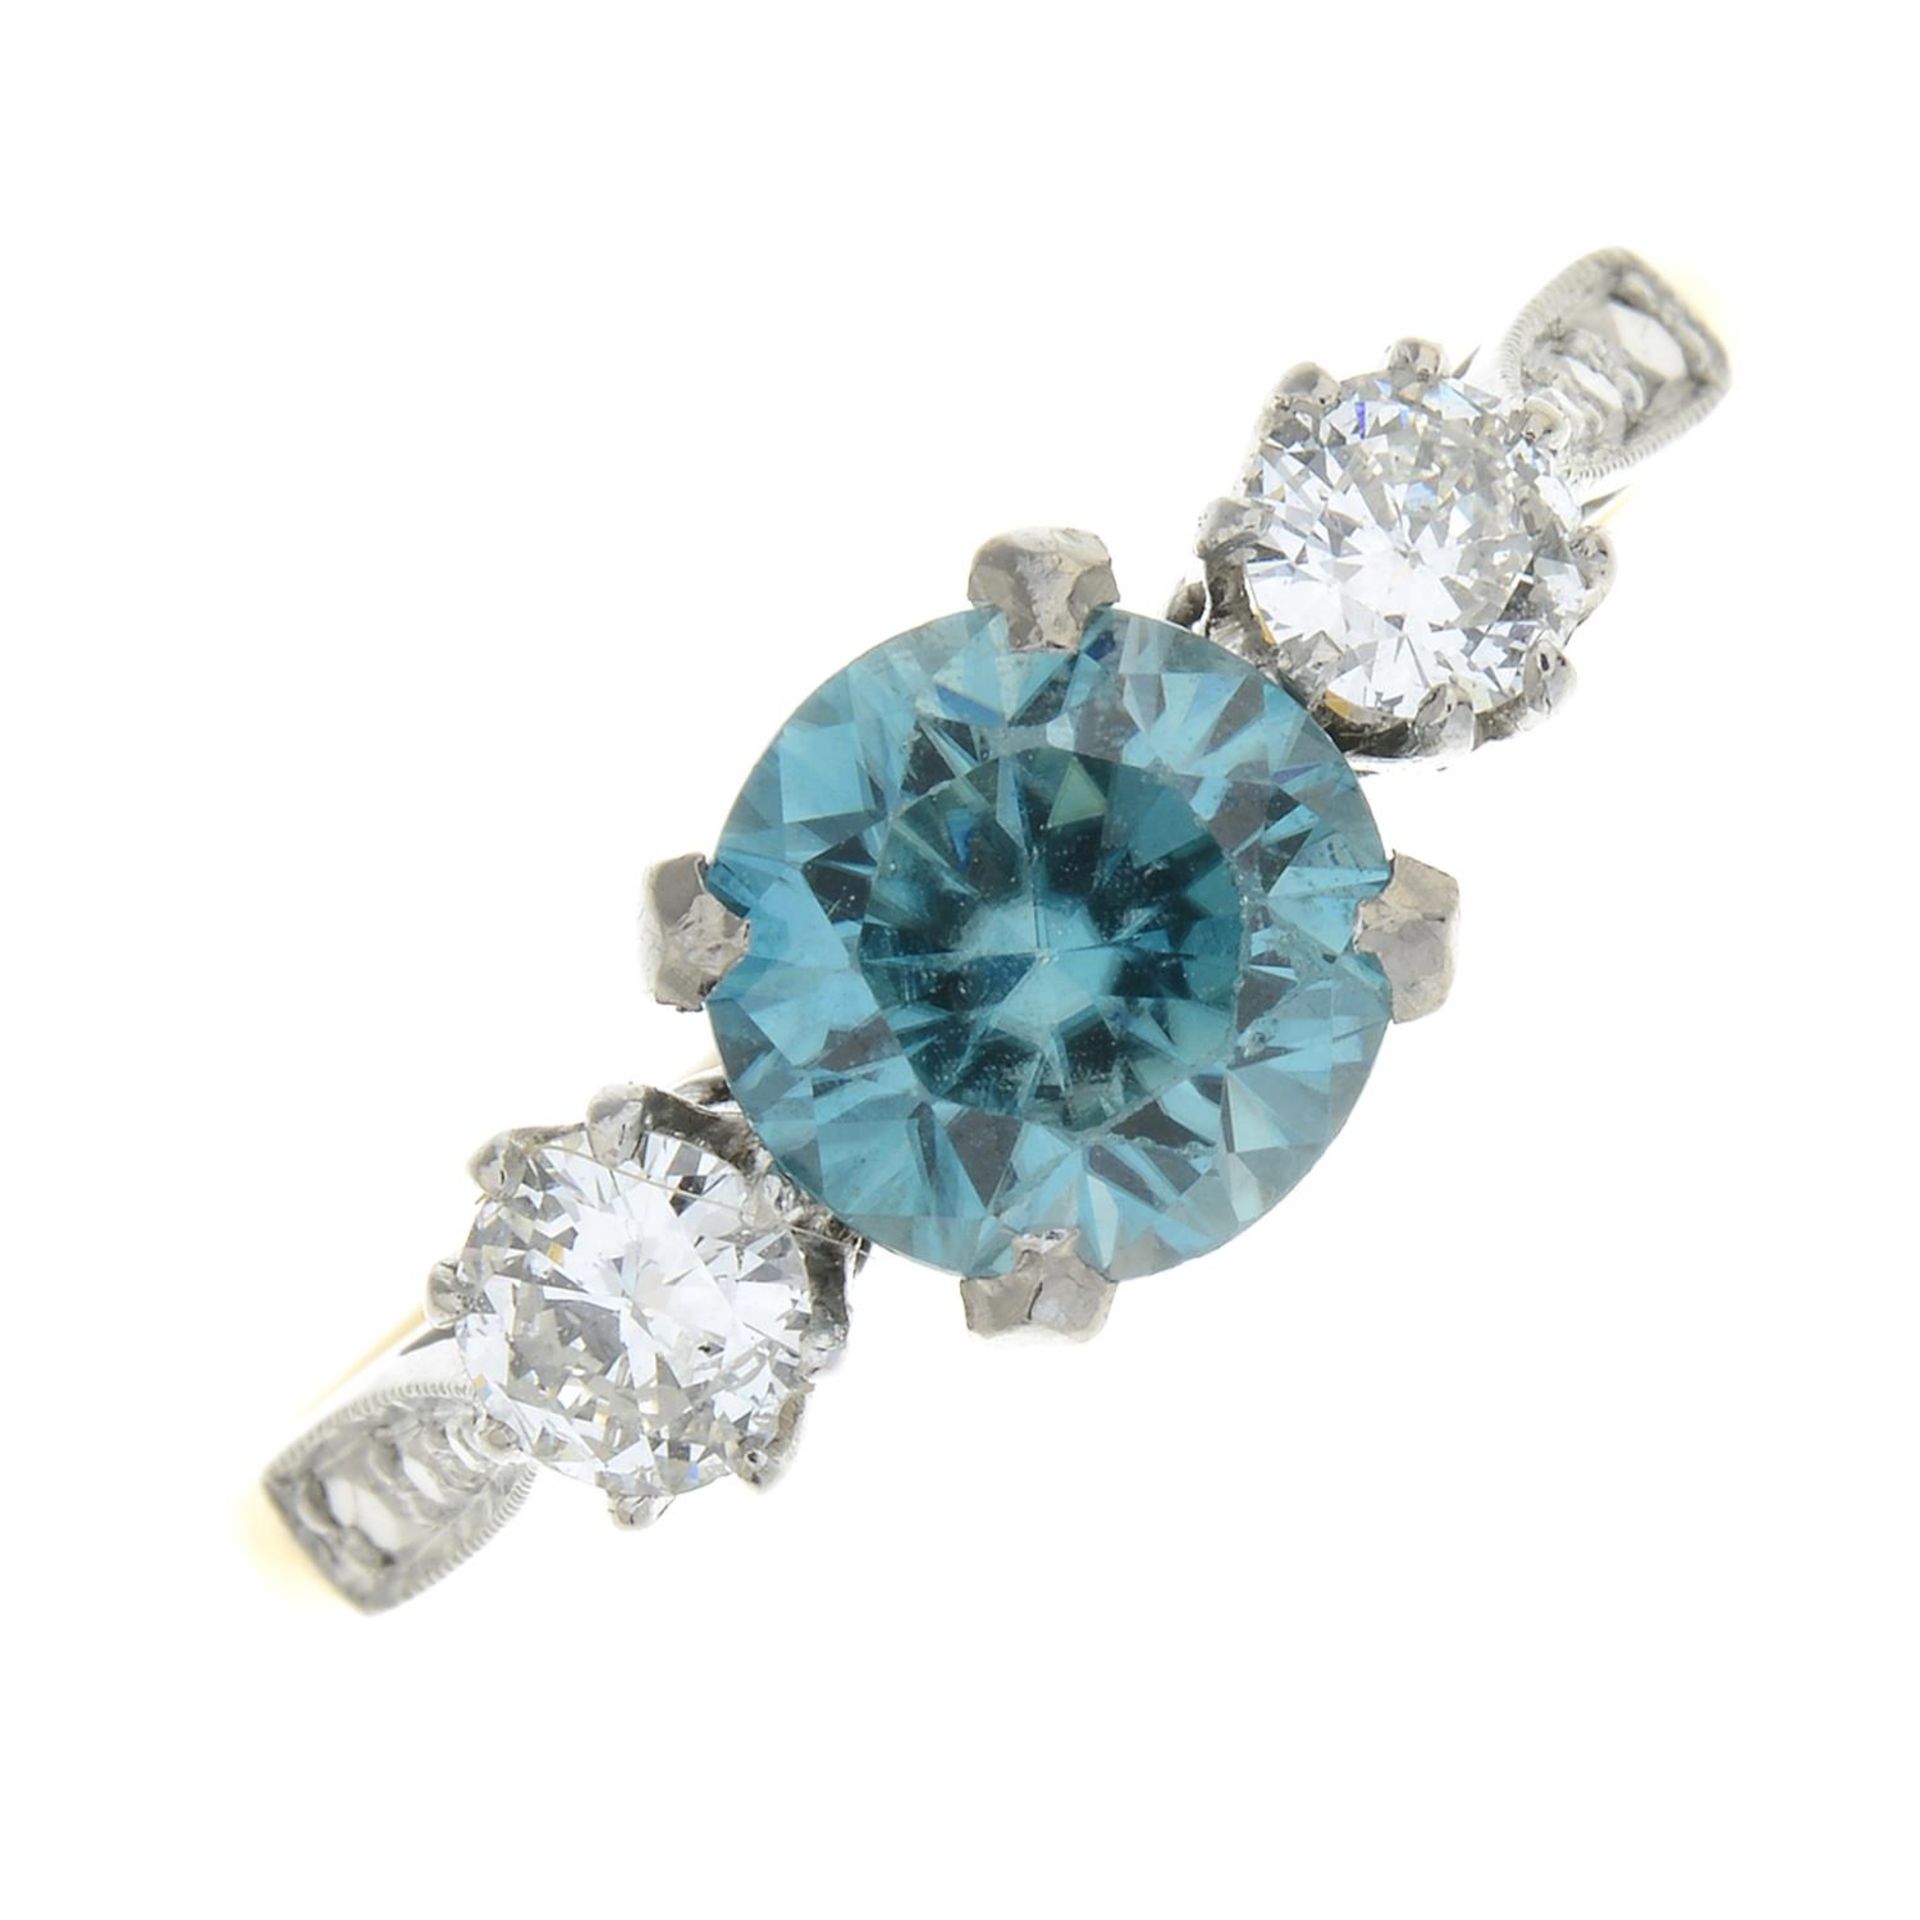 A blue zircon and diamond three-stone ring.